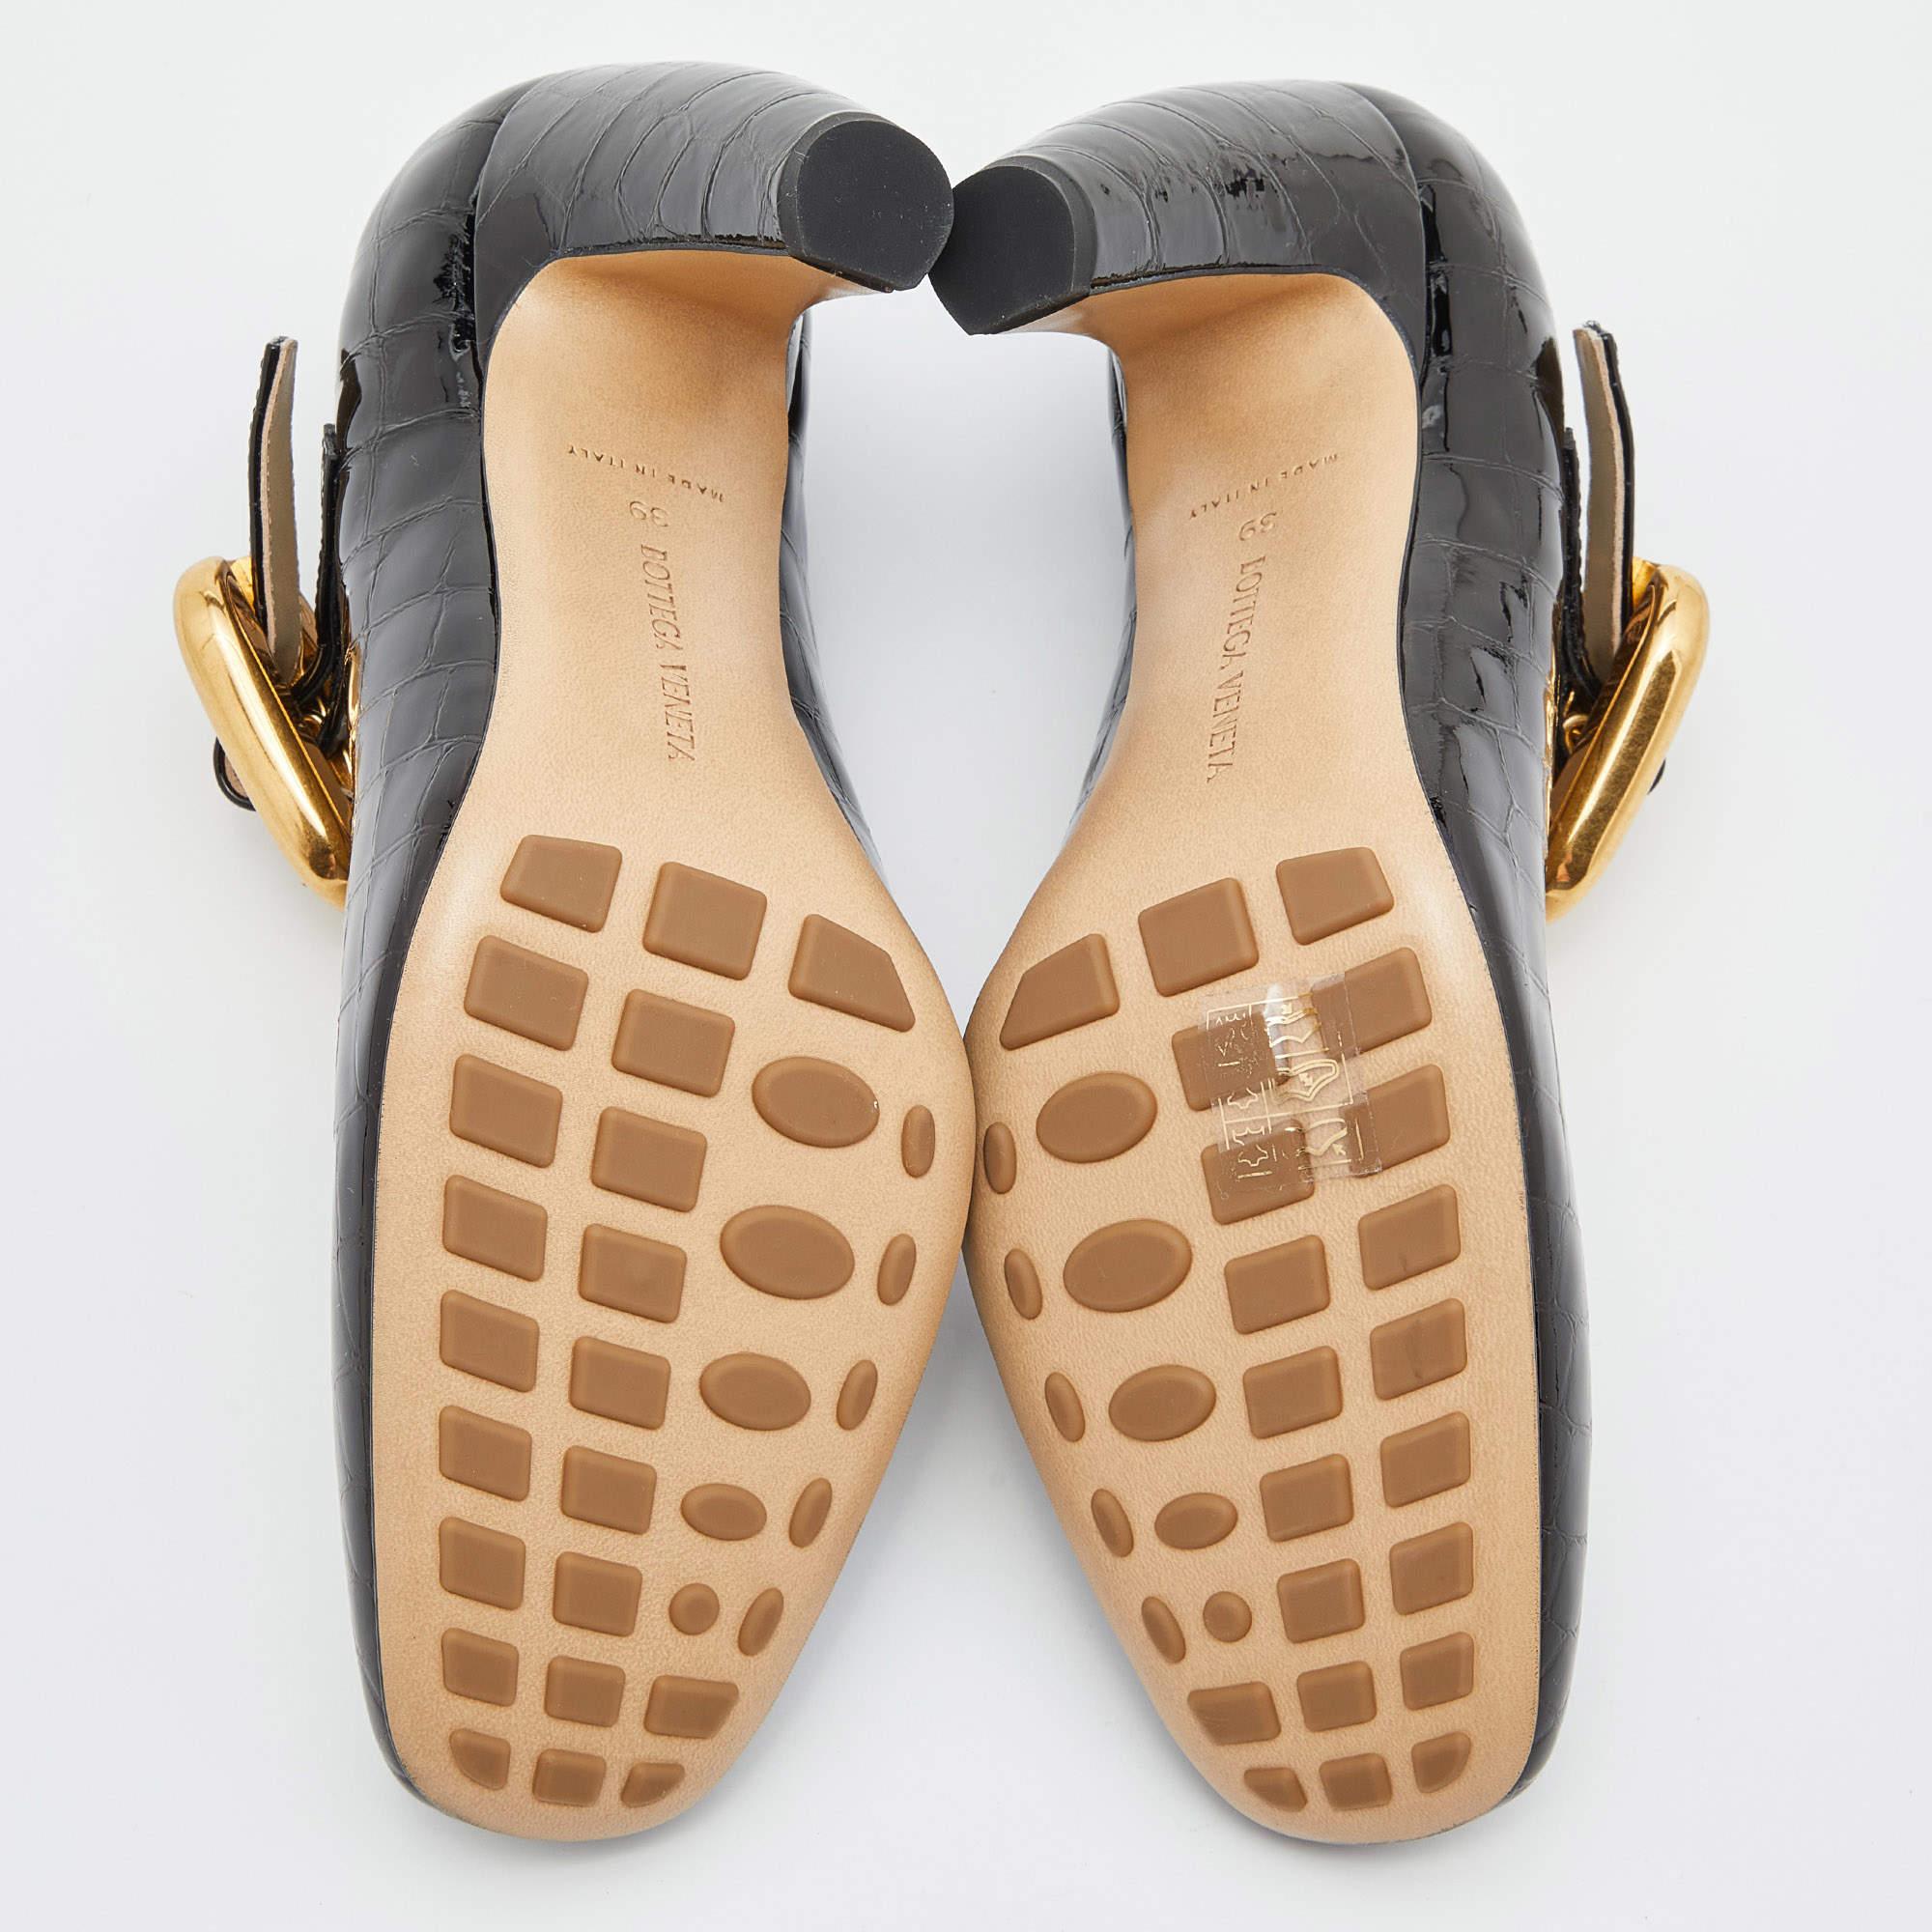 Bottega Veneta Black Croc Embossed Patent Leather Block Heel Pumps Size 39 5